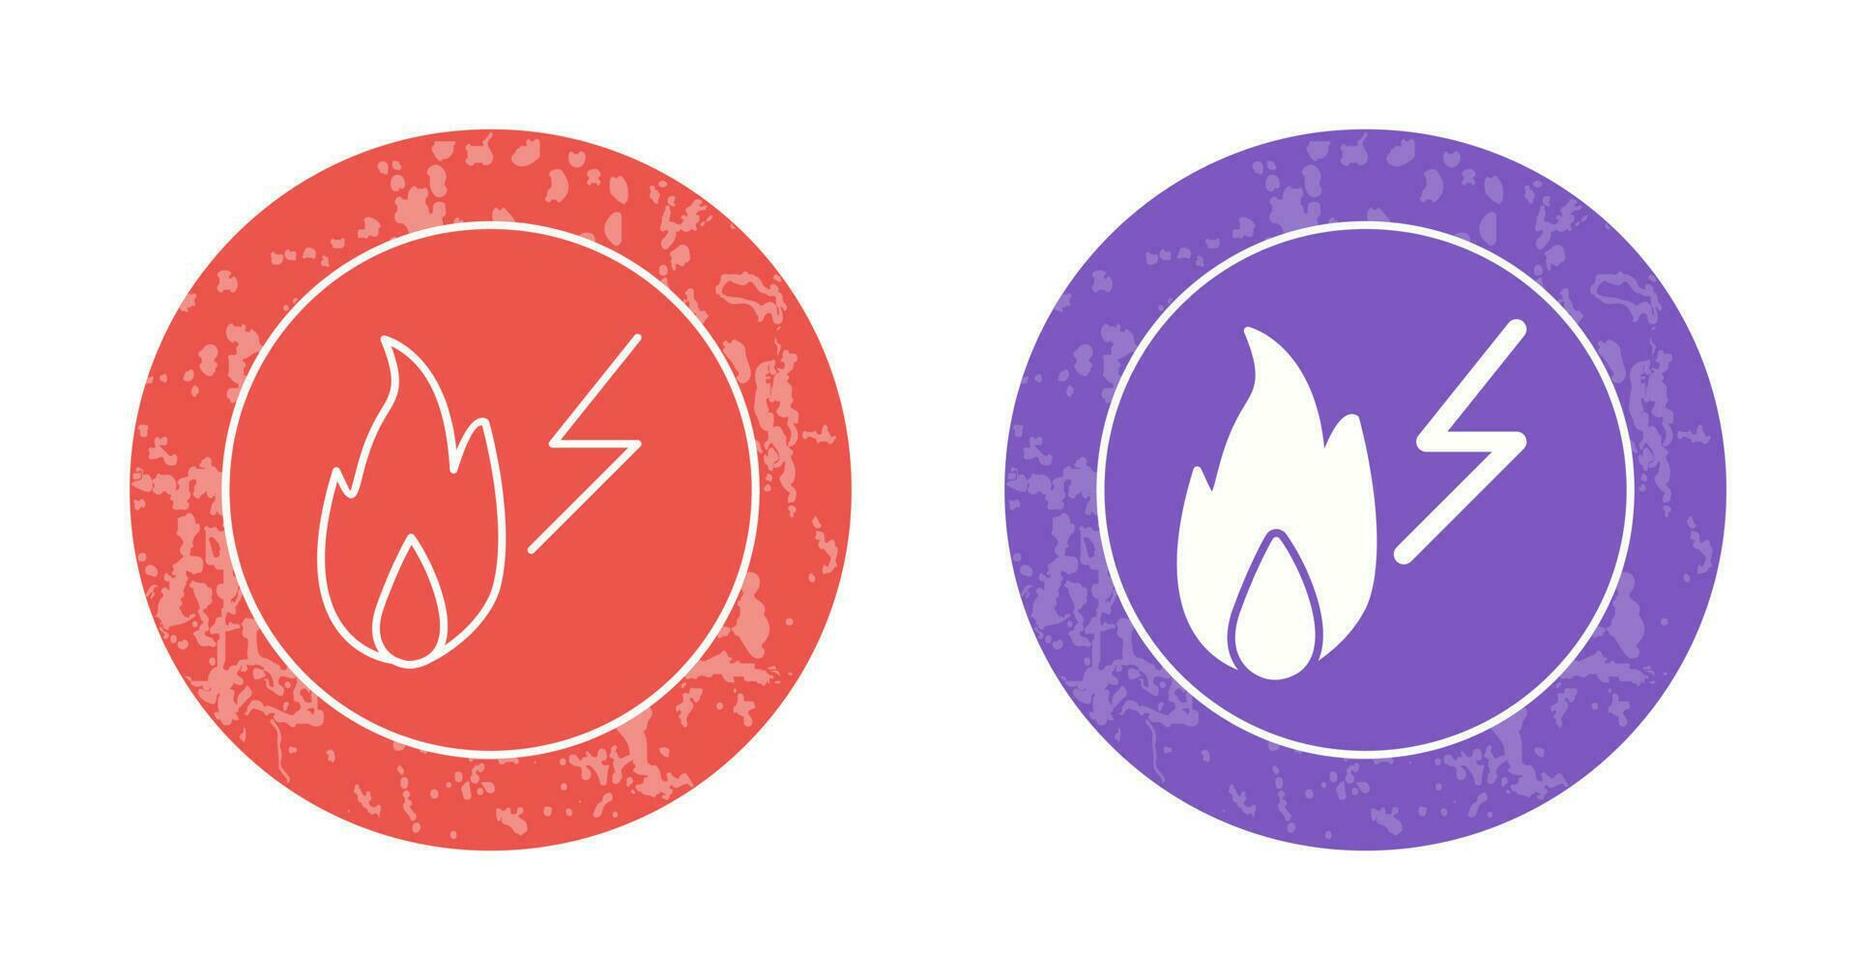 ícone de vetor de fogo de eletricidade exclusivo